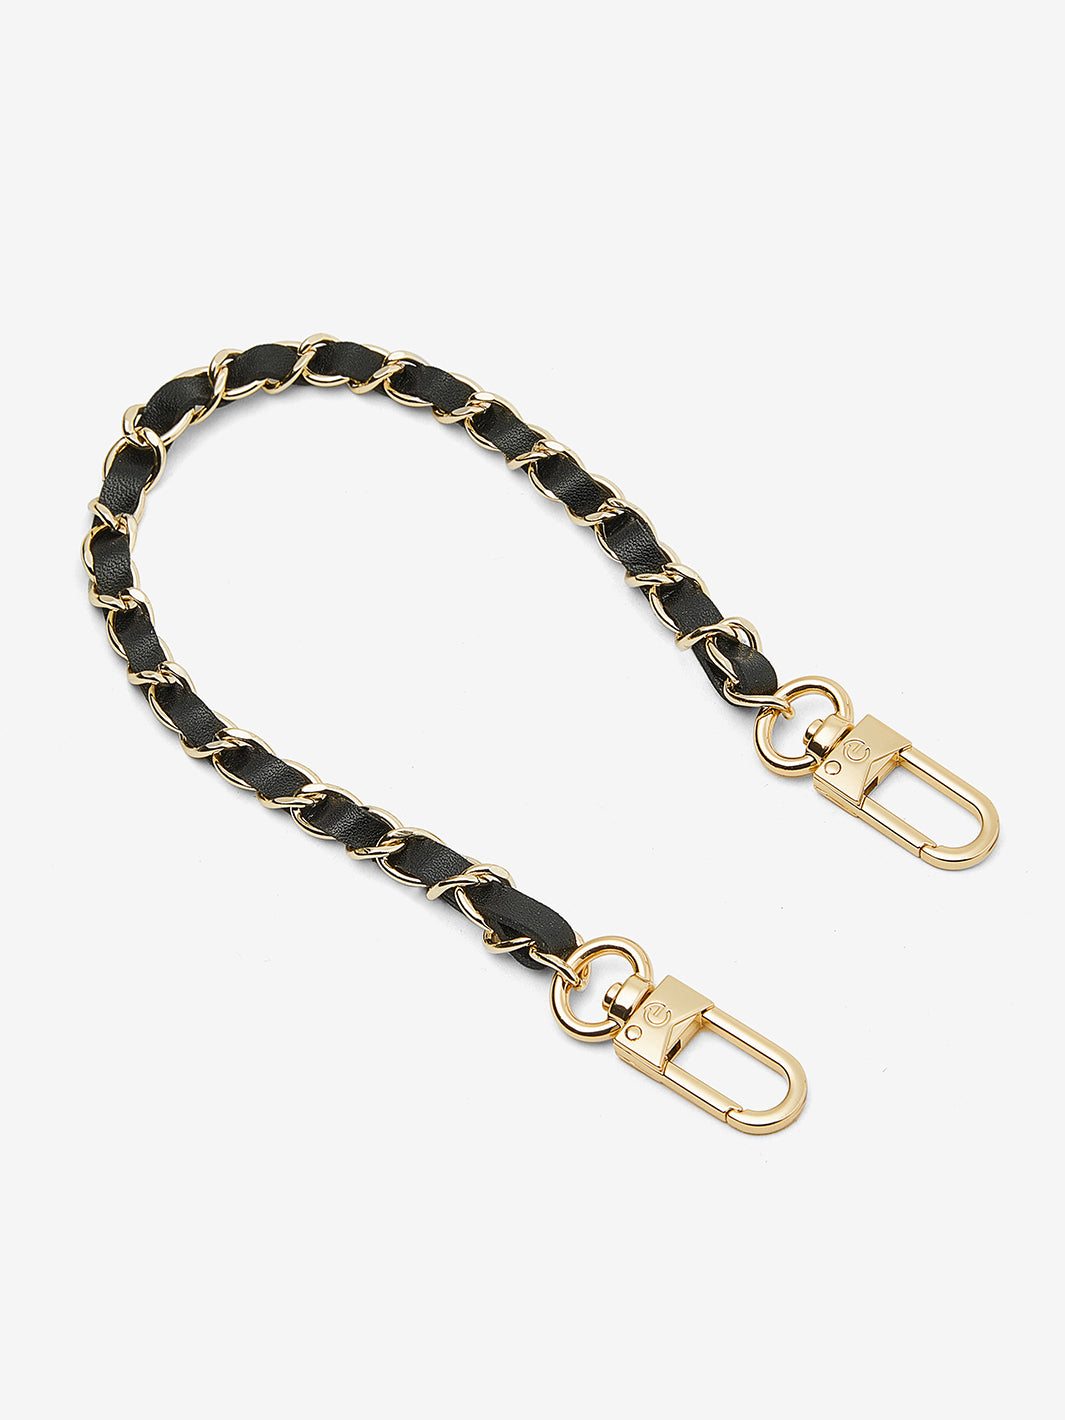 Elegant Chain Leather Wrist Strap